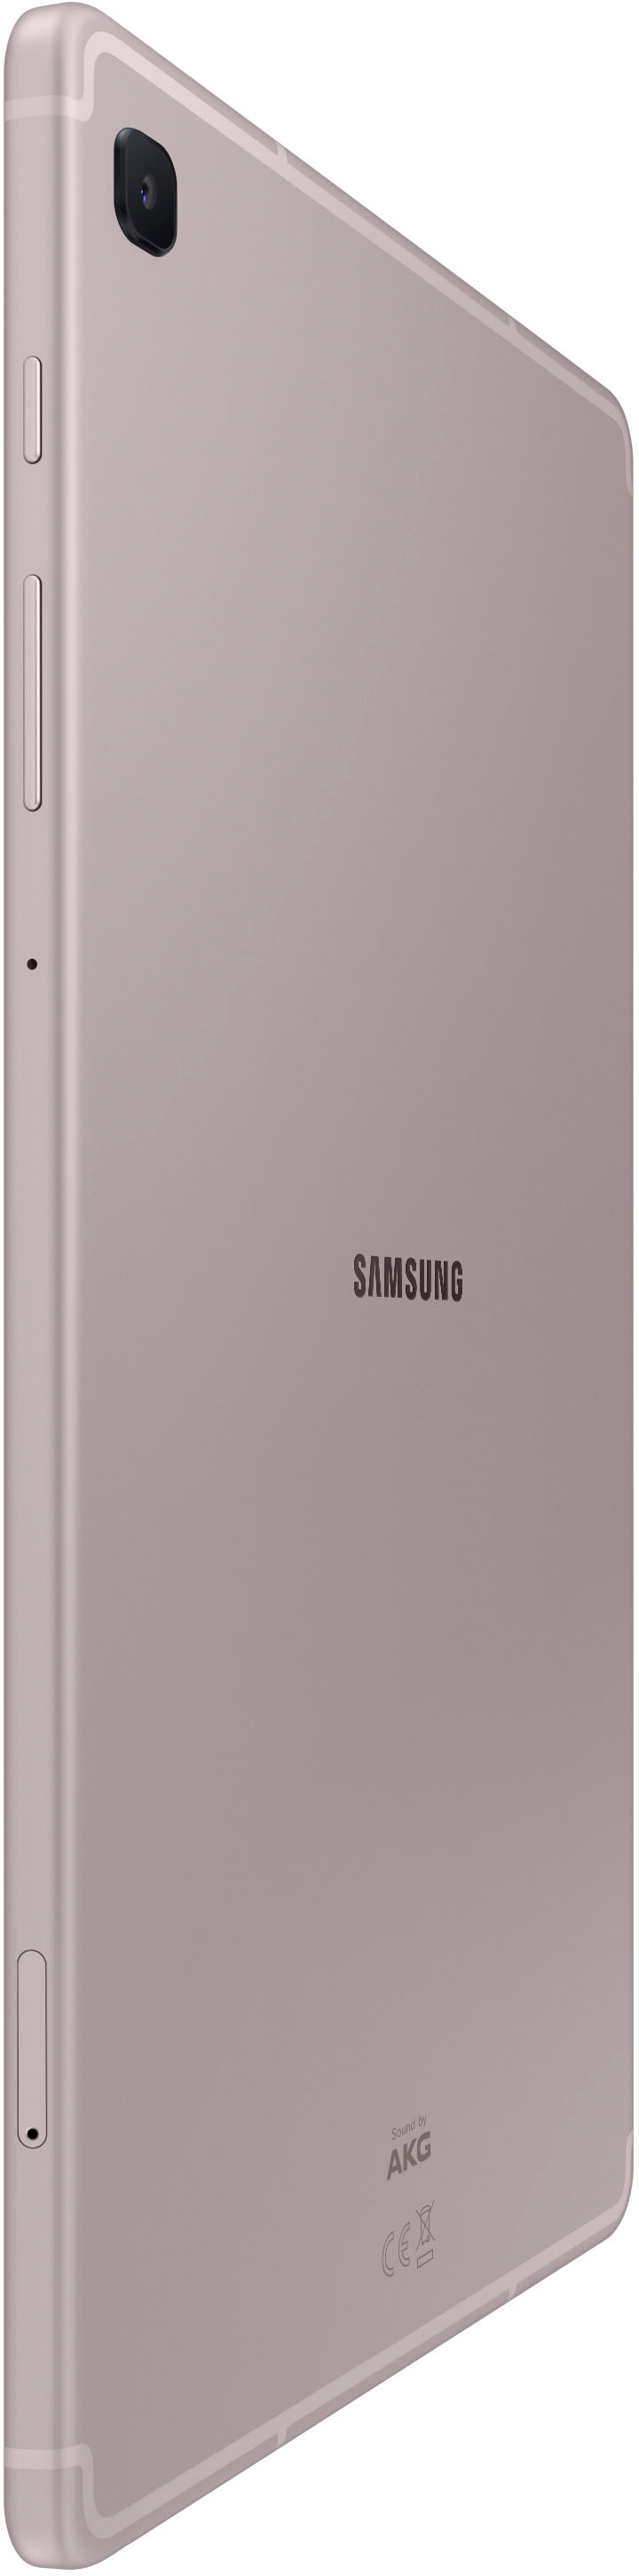 Samsung Galaxy Tab S6 Lite (2022) 10.4